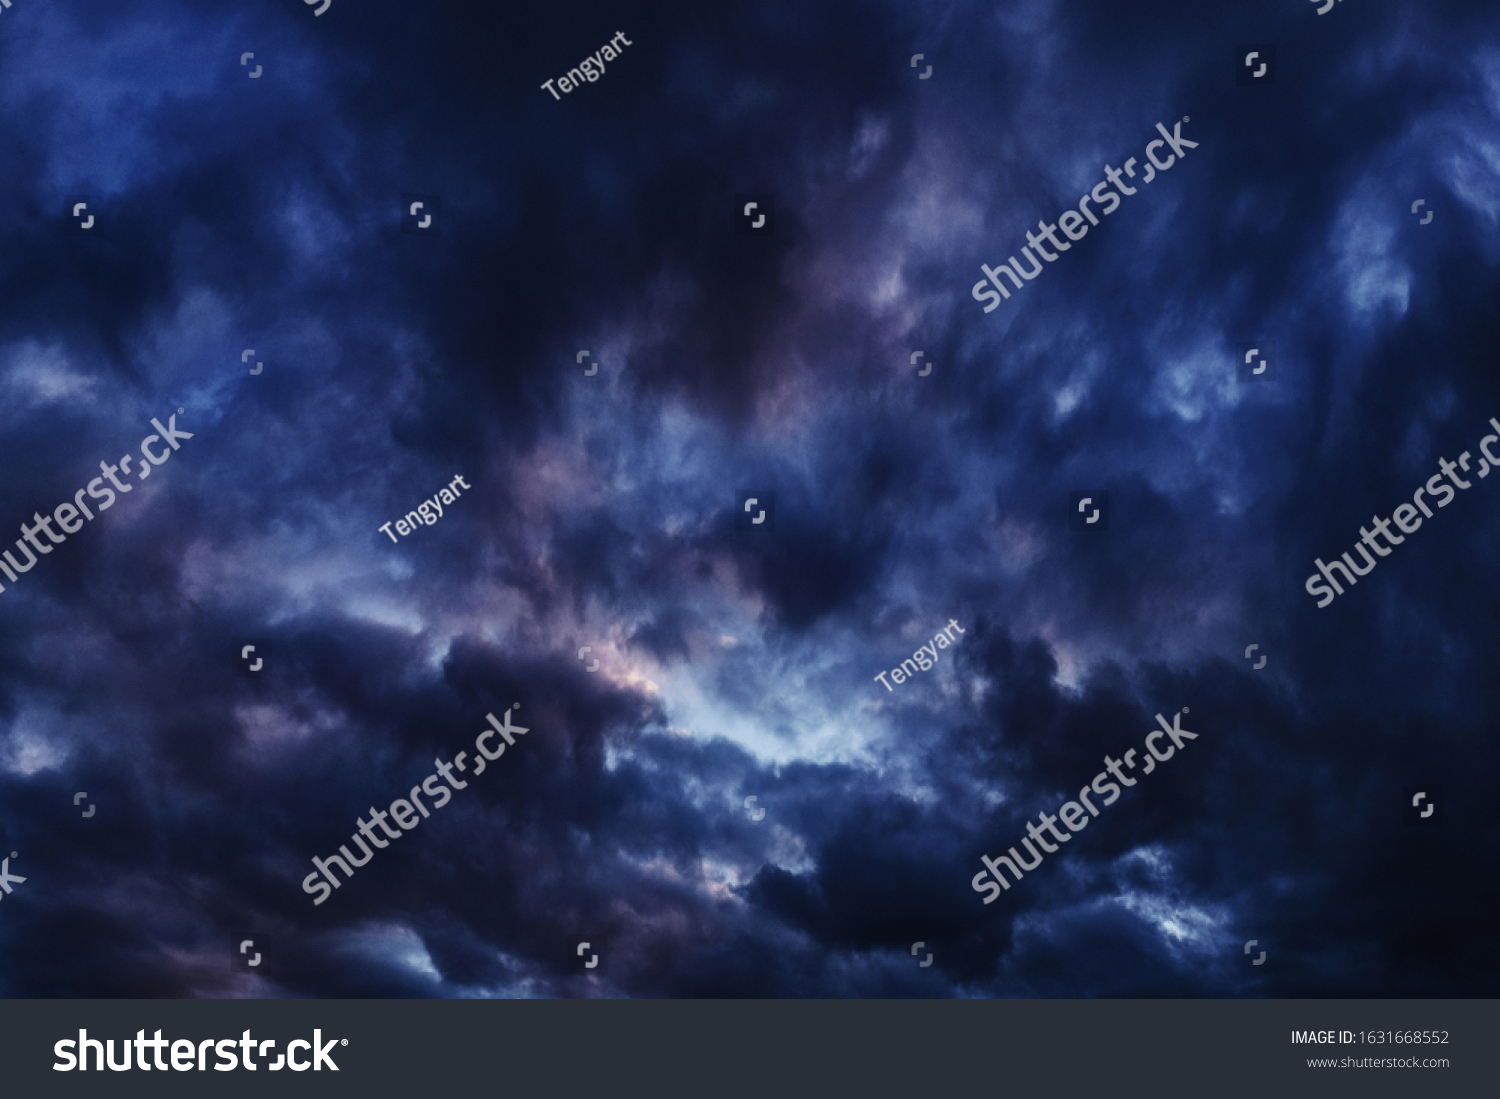 Purpleblue Dark Clouds Aesthetic Wallpaper Dramatic Stock Photo Edit Now 1631668552